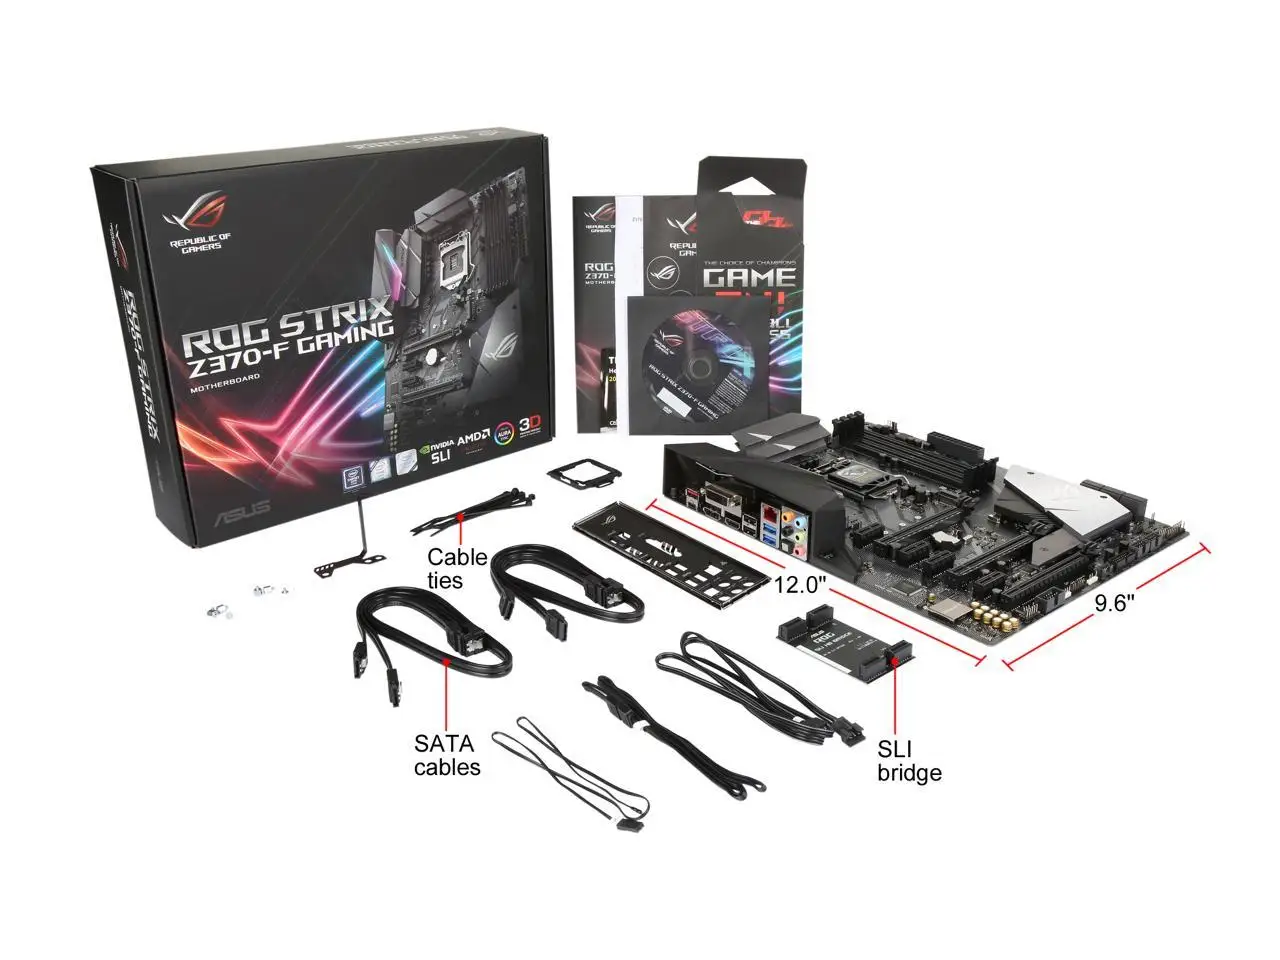 

ASUS ROG Strix Z370-F Gaming LGA 1151 (300 Series) Intel Z370 HDMI SATA 6Gb/s USB 3.1 ATX Intel Motherboard